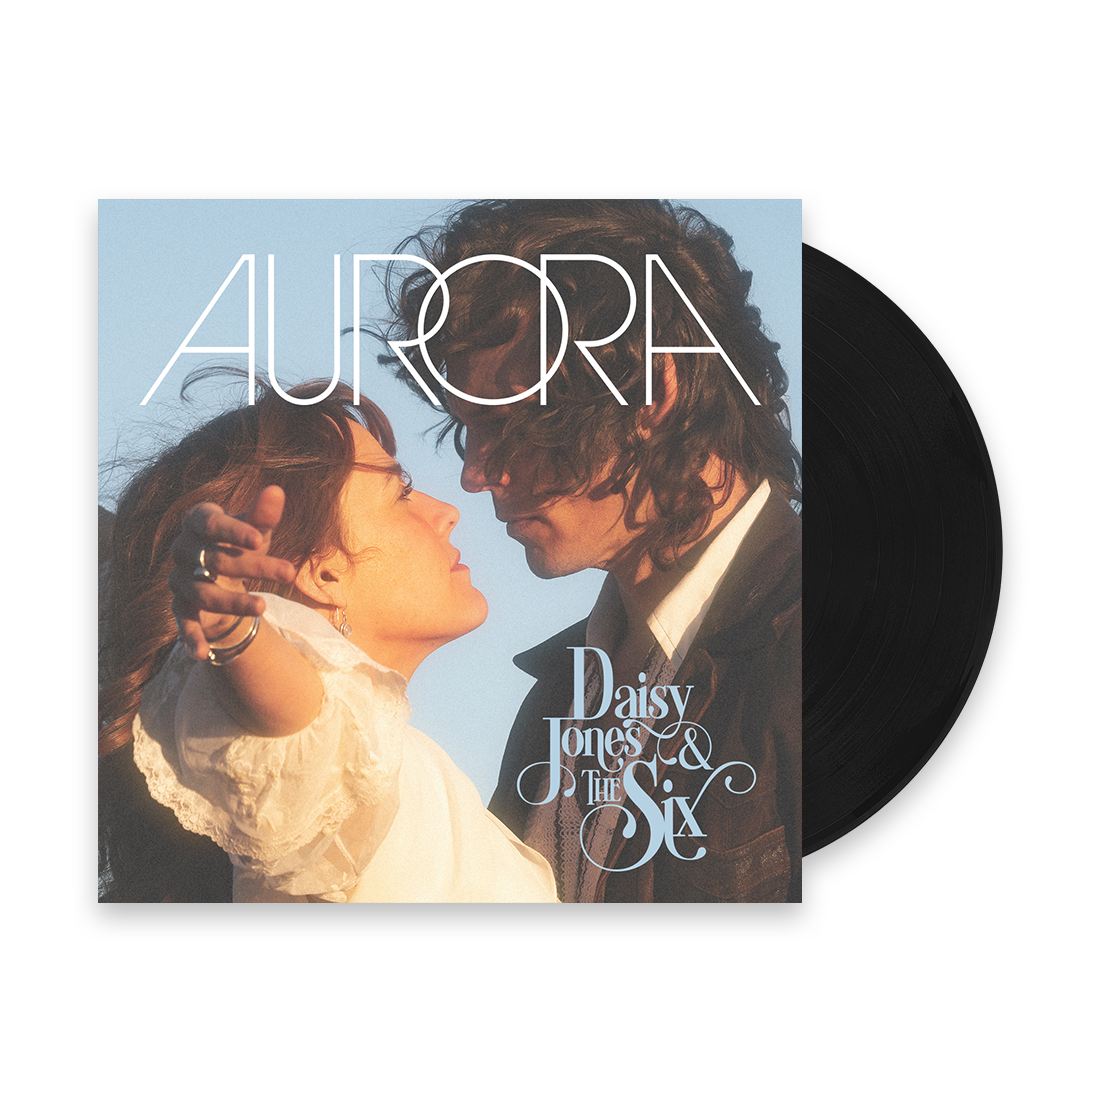 Daisy Jones & The Six - AURORA (Vinyl) - Joco Records